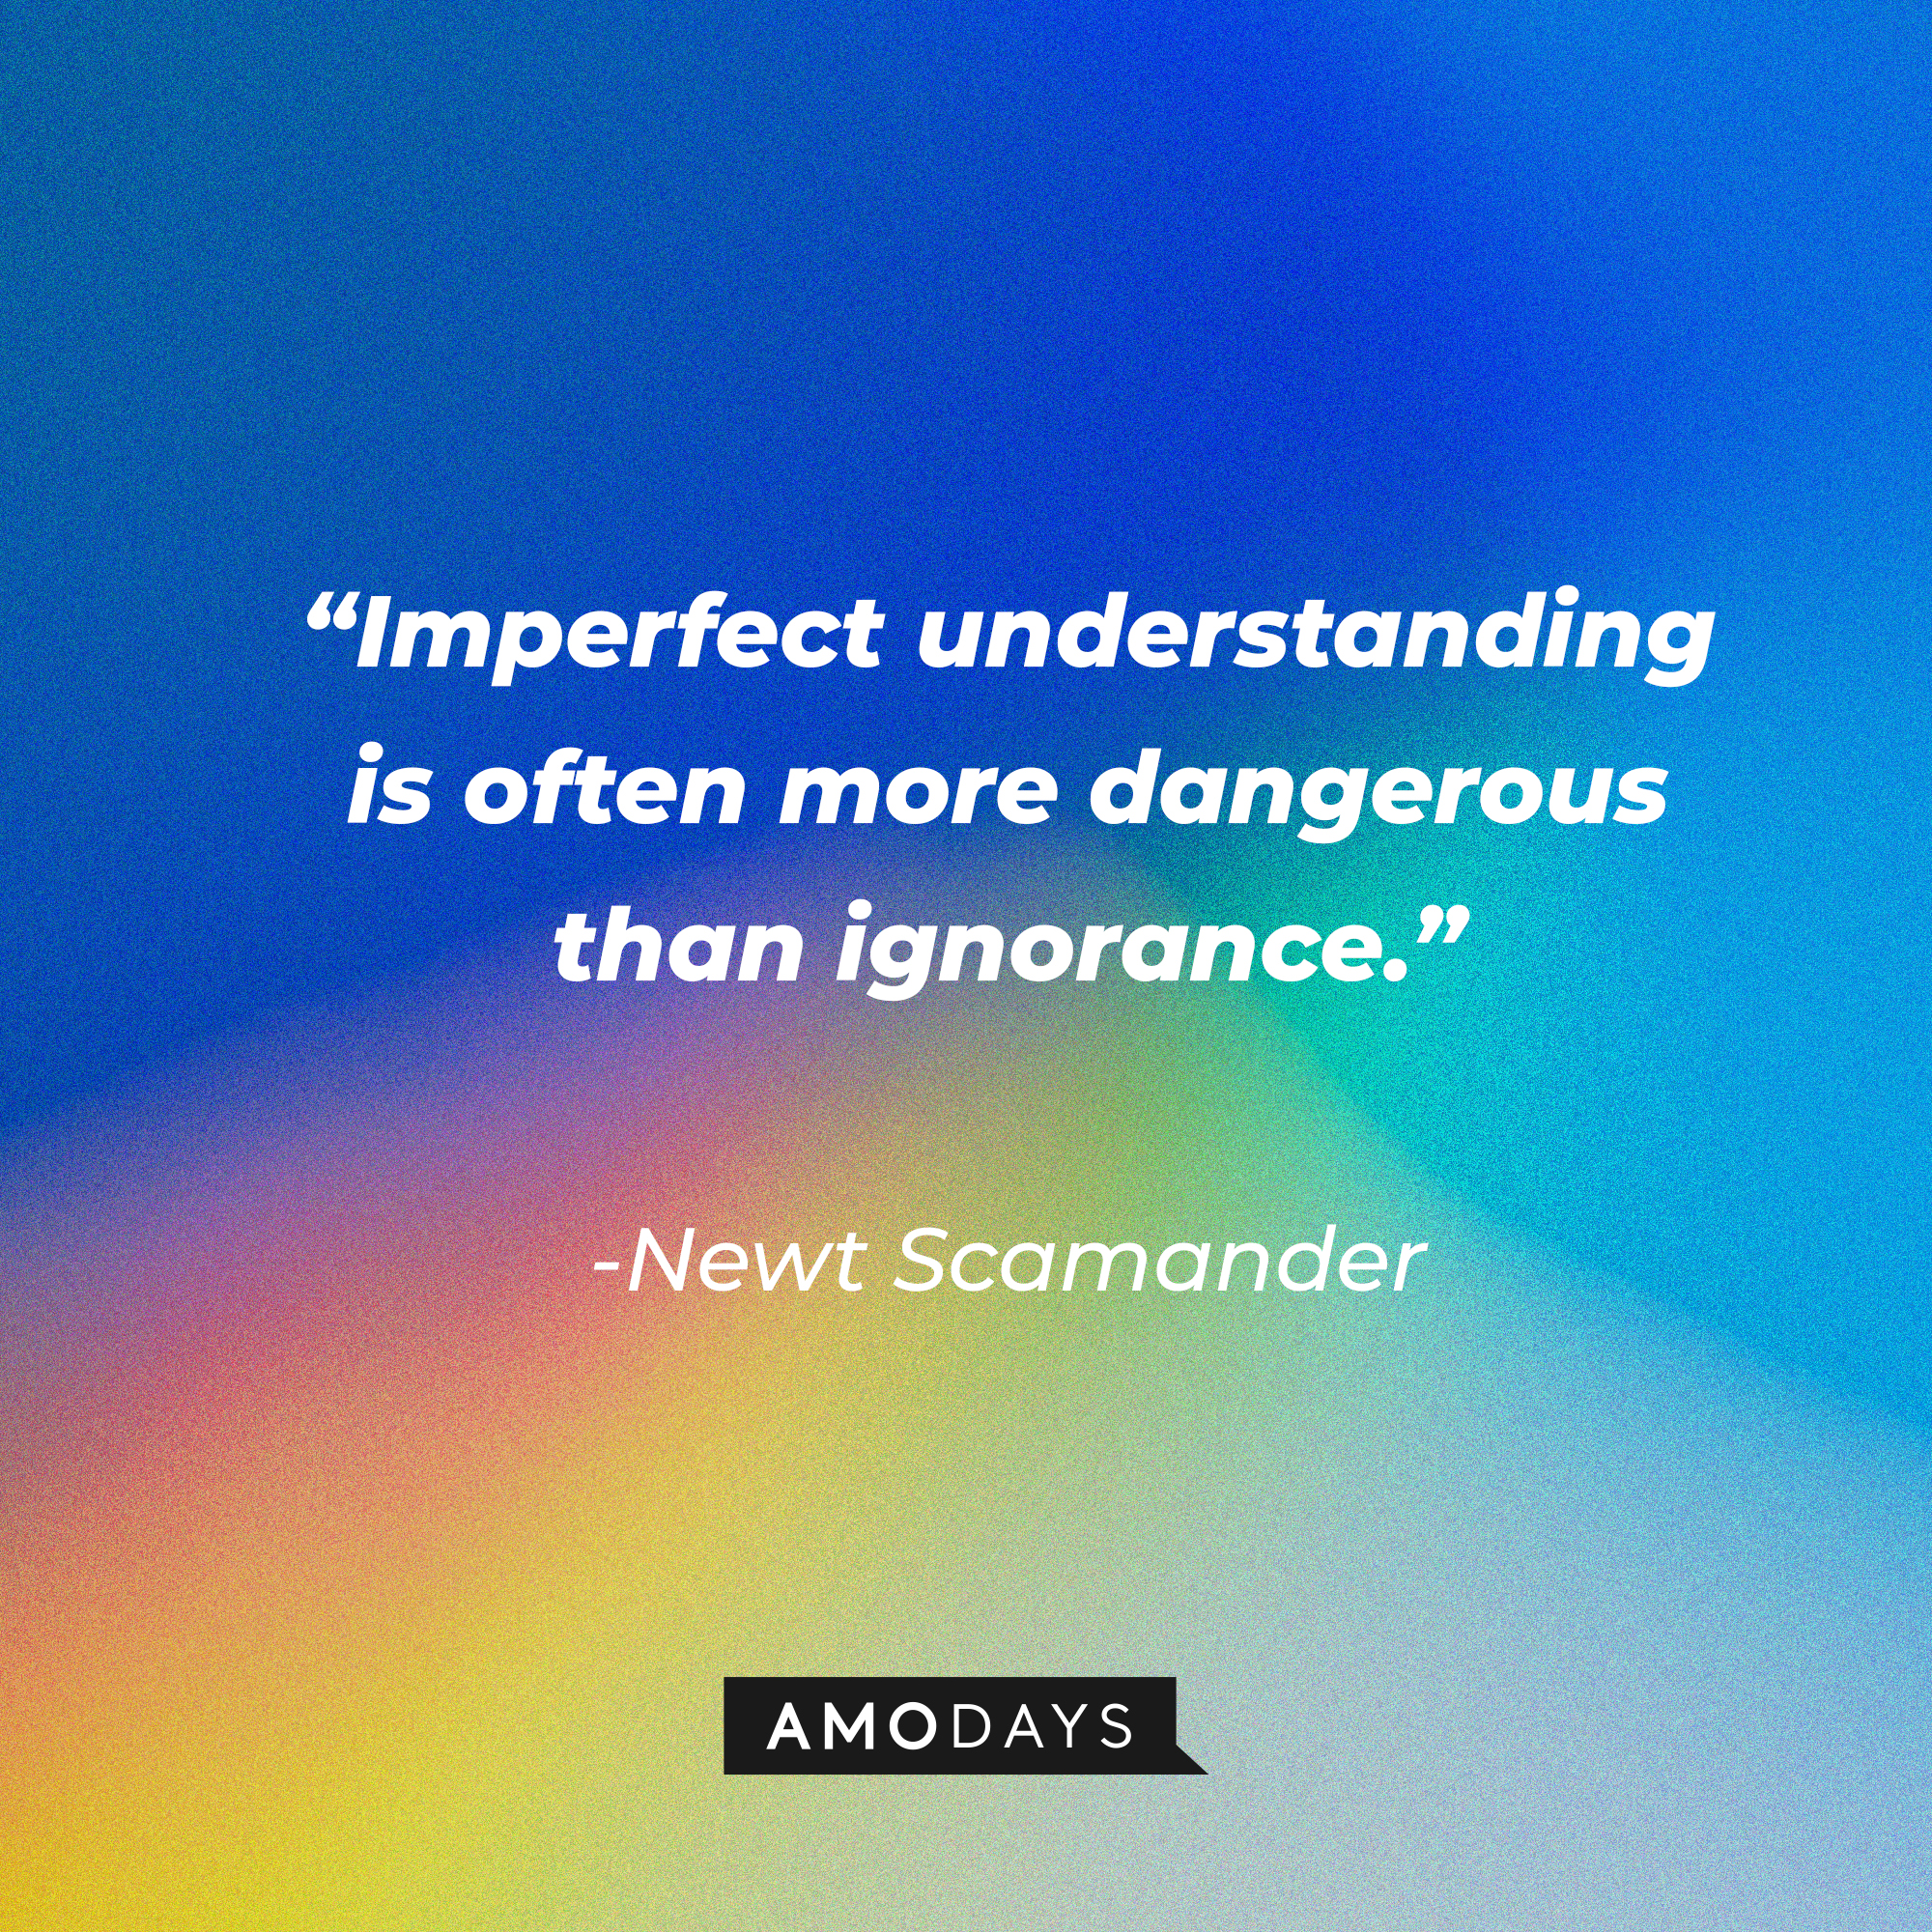 Newt Scamander's quote: "Imperfect understanding is often more dangerous than ignorance." | Source: facebook.com/fantasticbeastsmovie